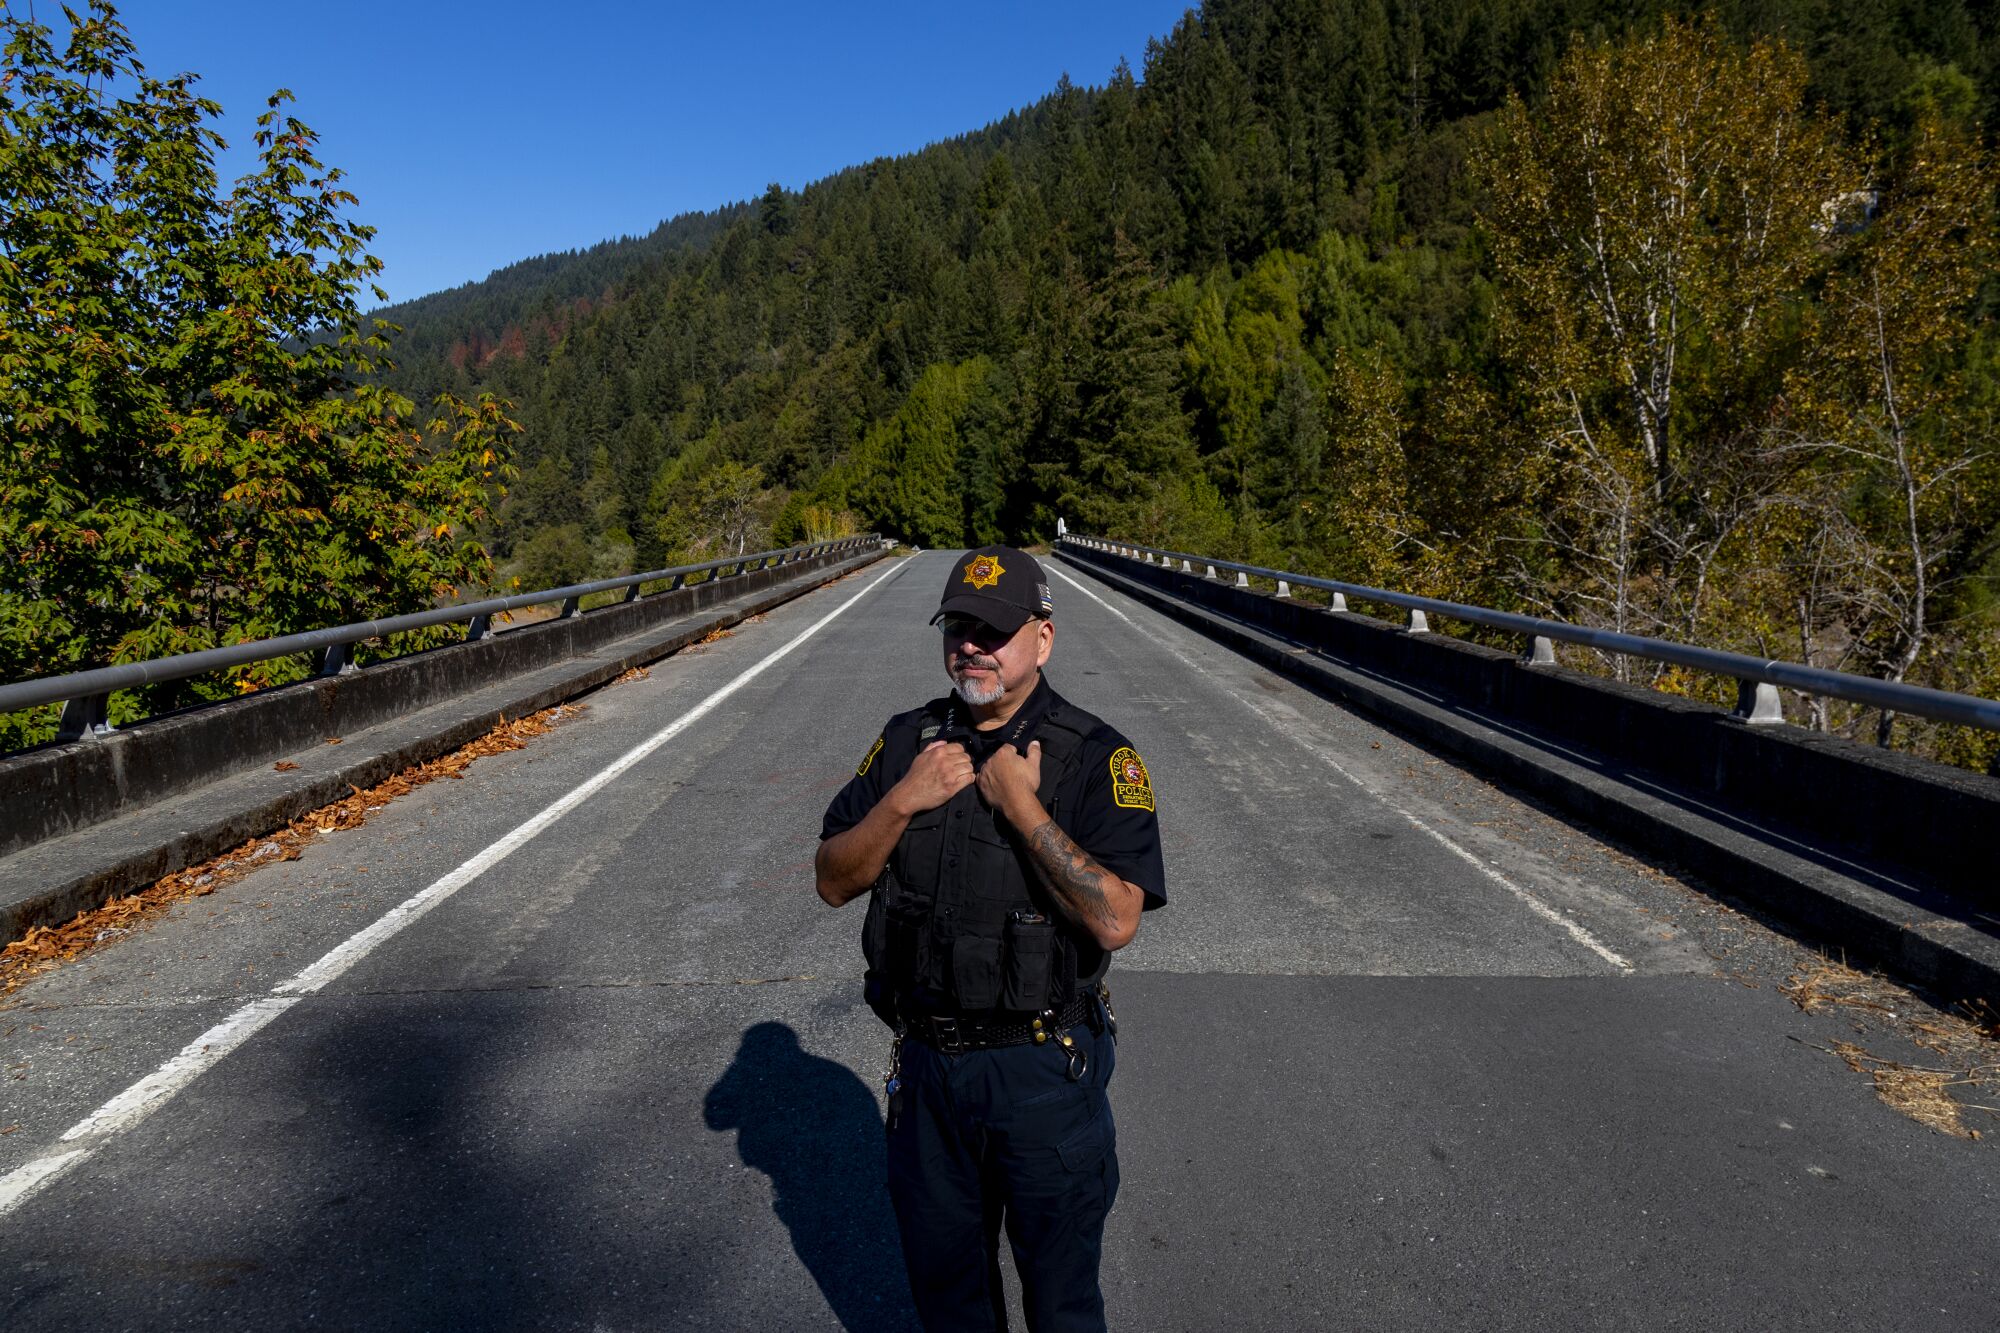 Yurok Tribal Police Chief Greg O'Rourke는 주로 소나무 숲으로 둘러싸인 도로 다리에 서 있습니다.